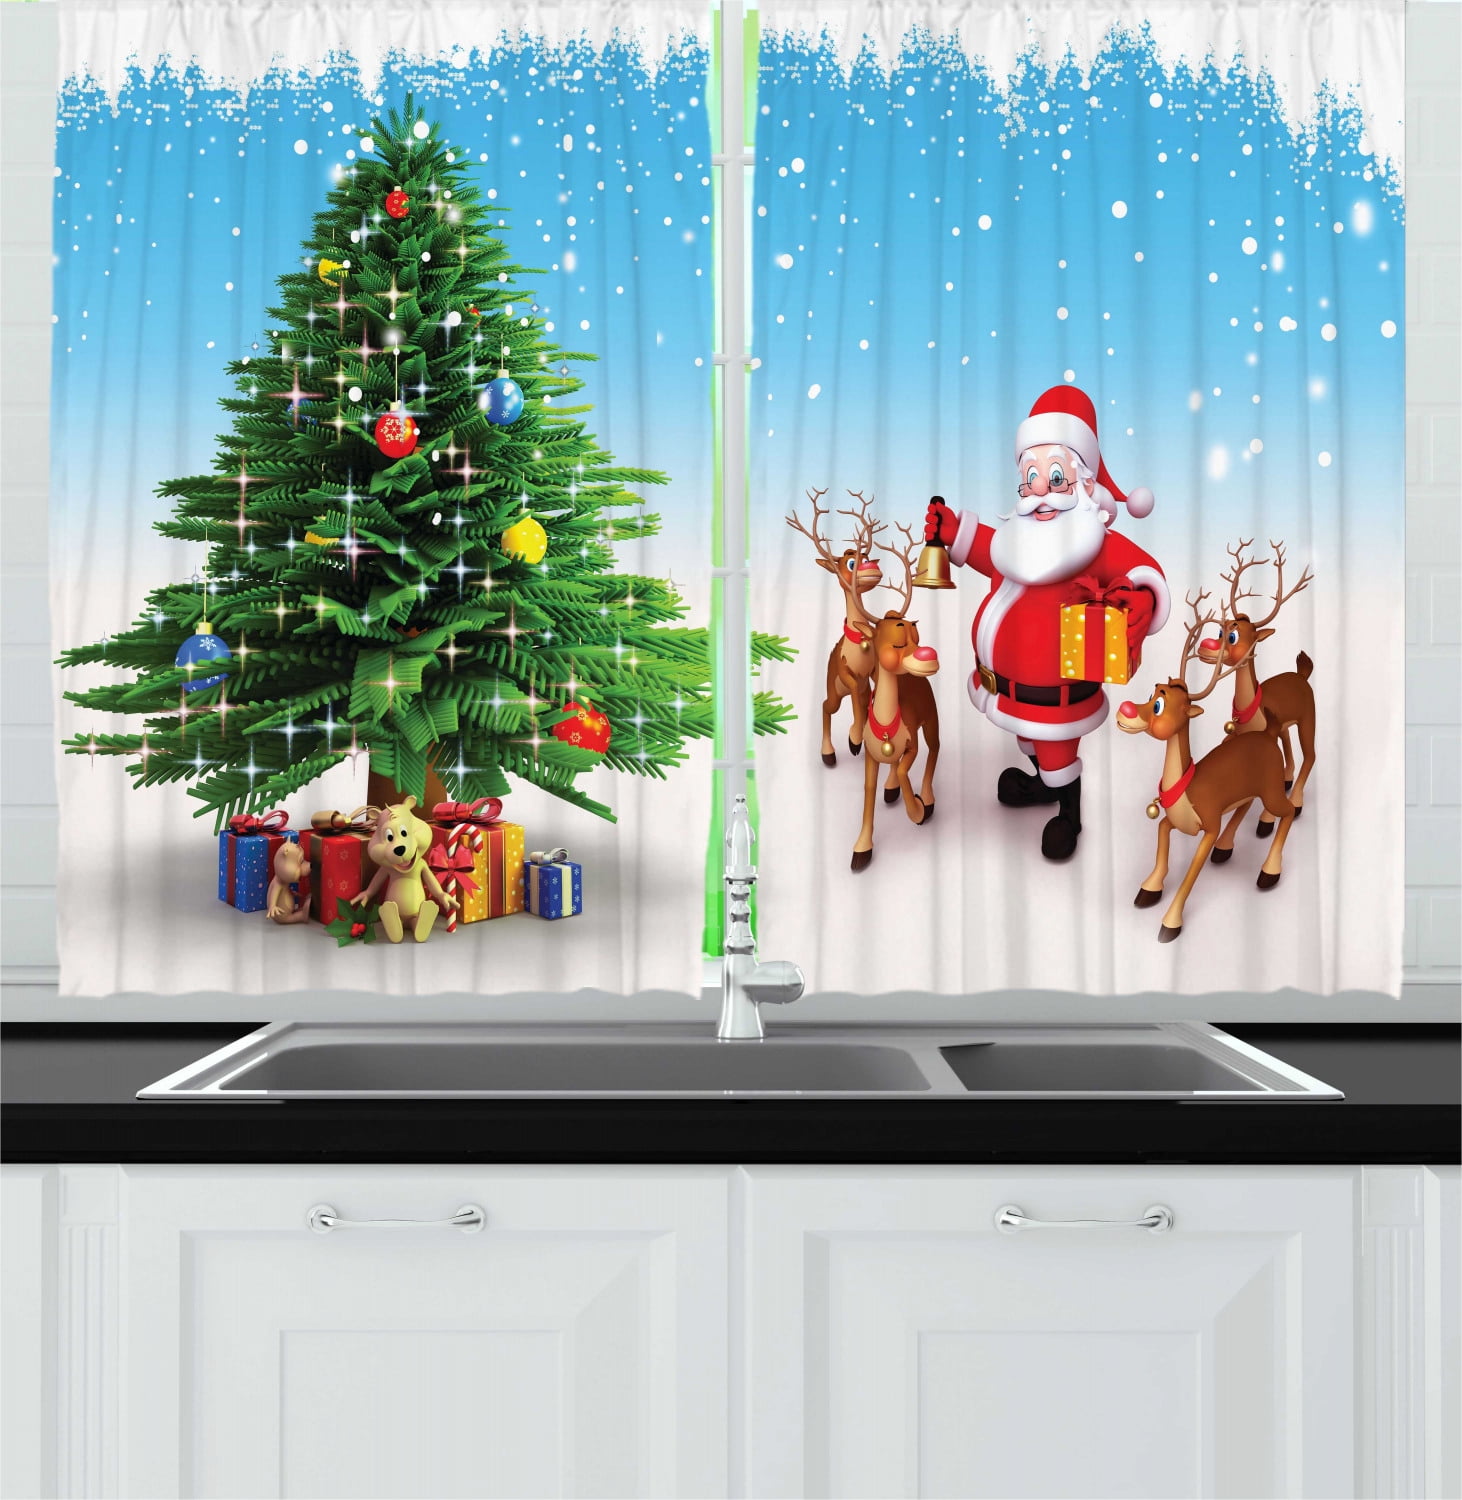 3D Blackout Curtains Fabric Panel Drapes Christmas Window Decoration Santa 3 